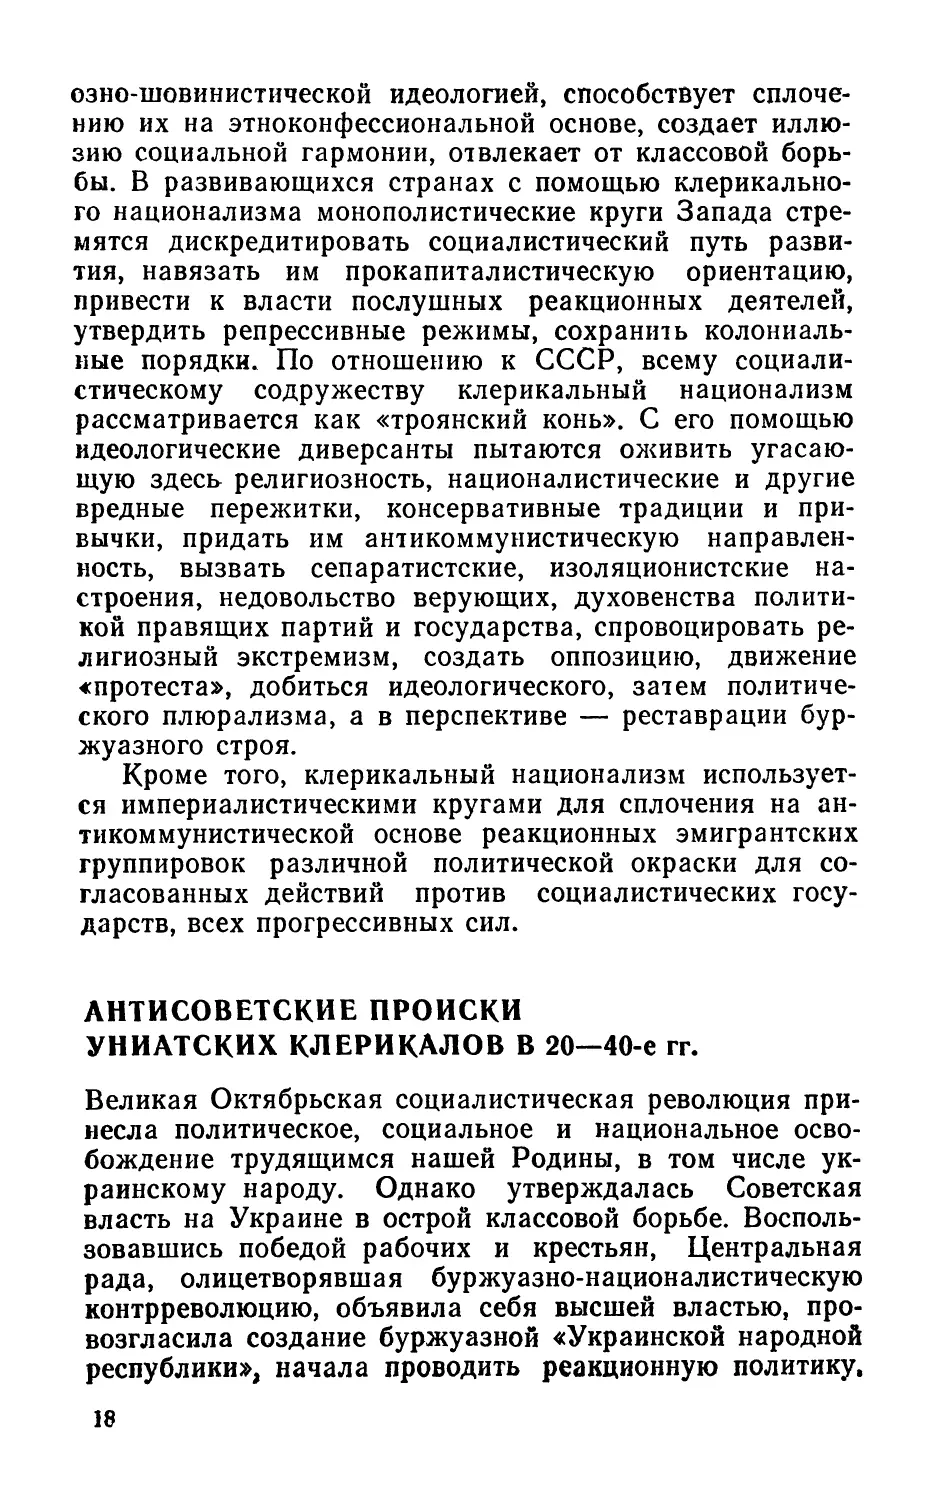 Антисоветские происки униатских клерикалов в 20—40-е гг